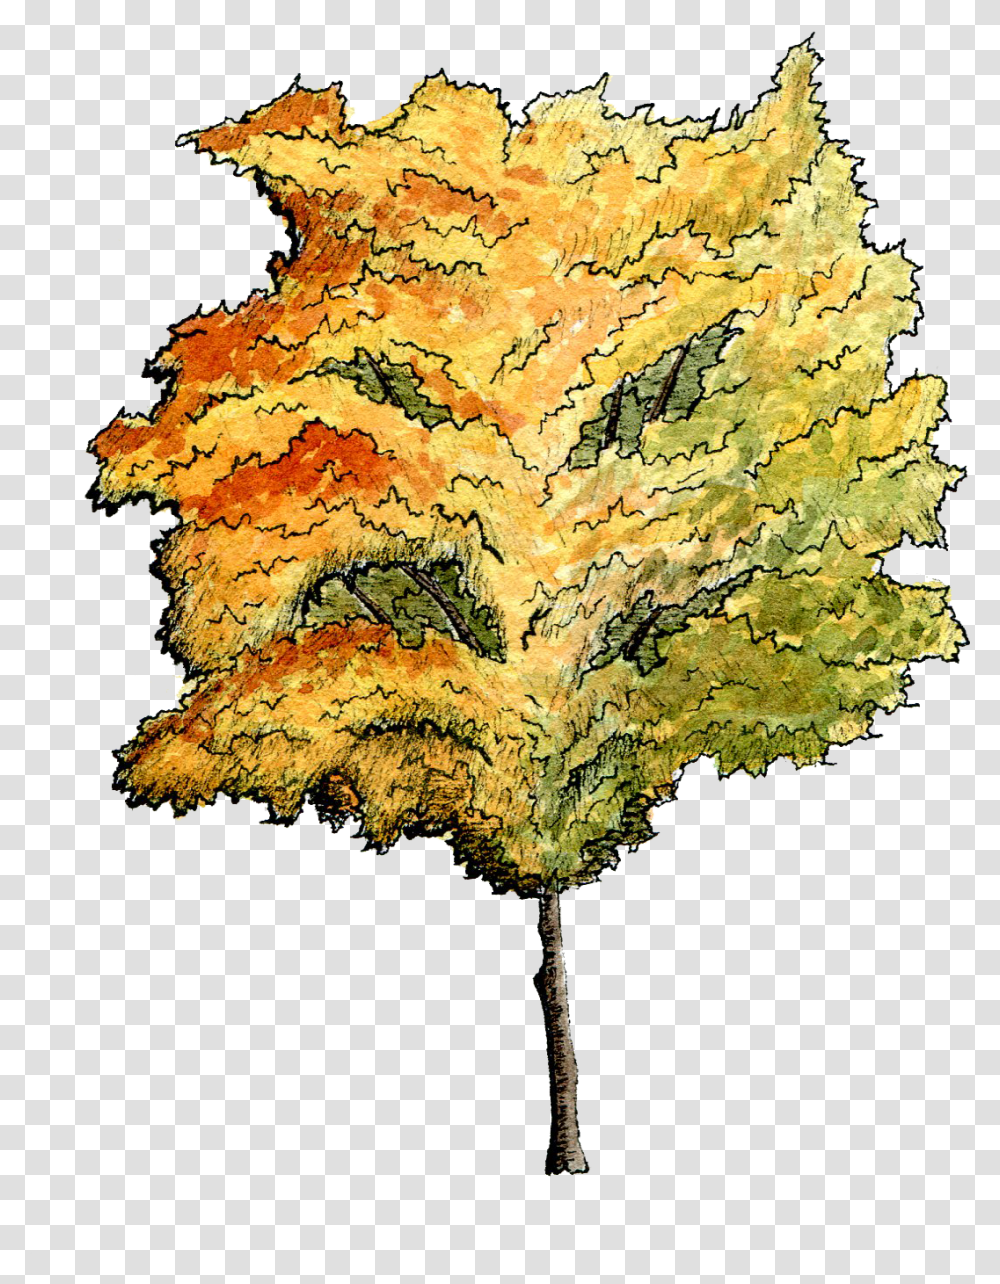 Clipart Trees Watercolor Tree Architectural Watercolor Paint, Leaf, Plant, Maple, Maple Leaf Transparent Png